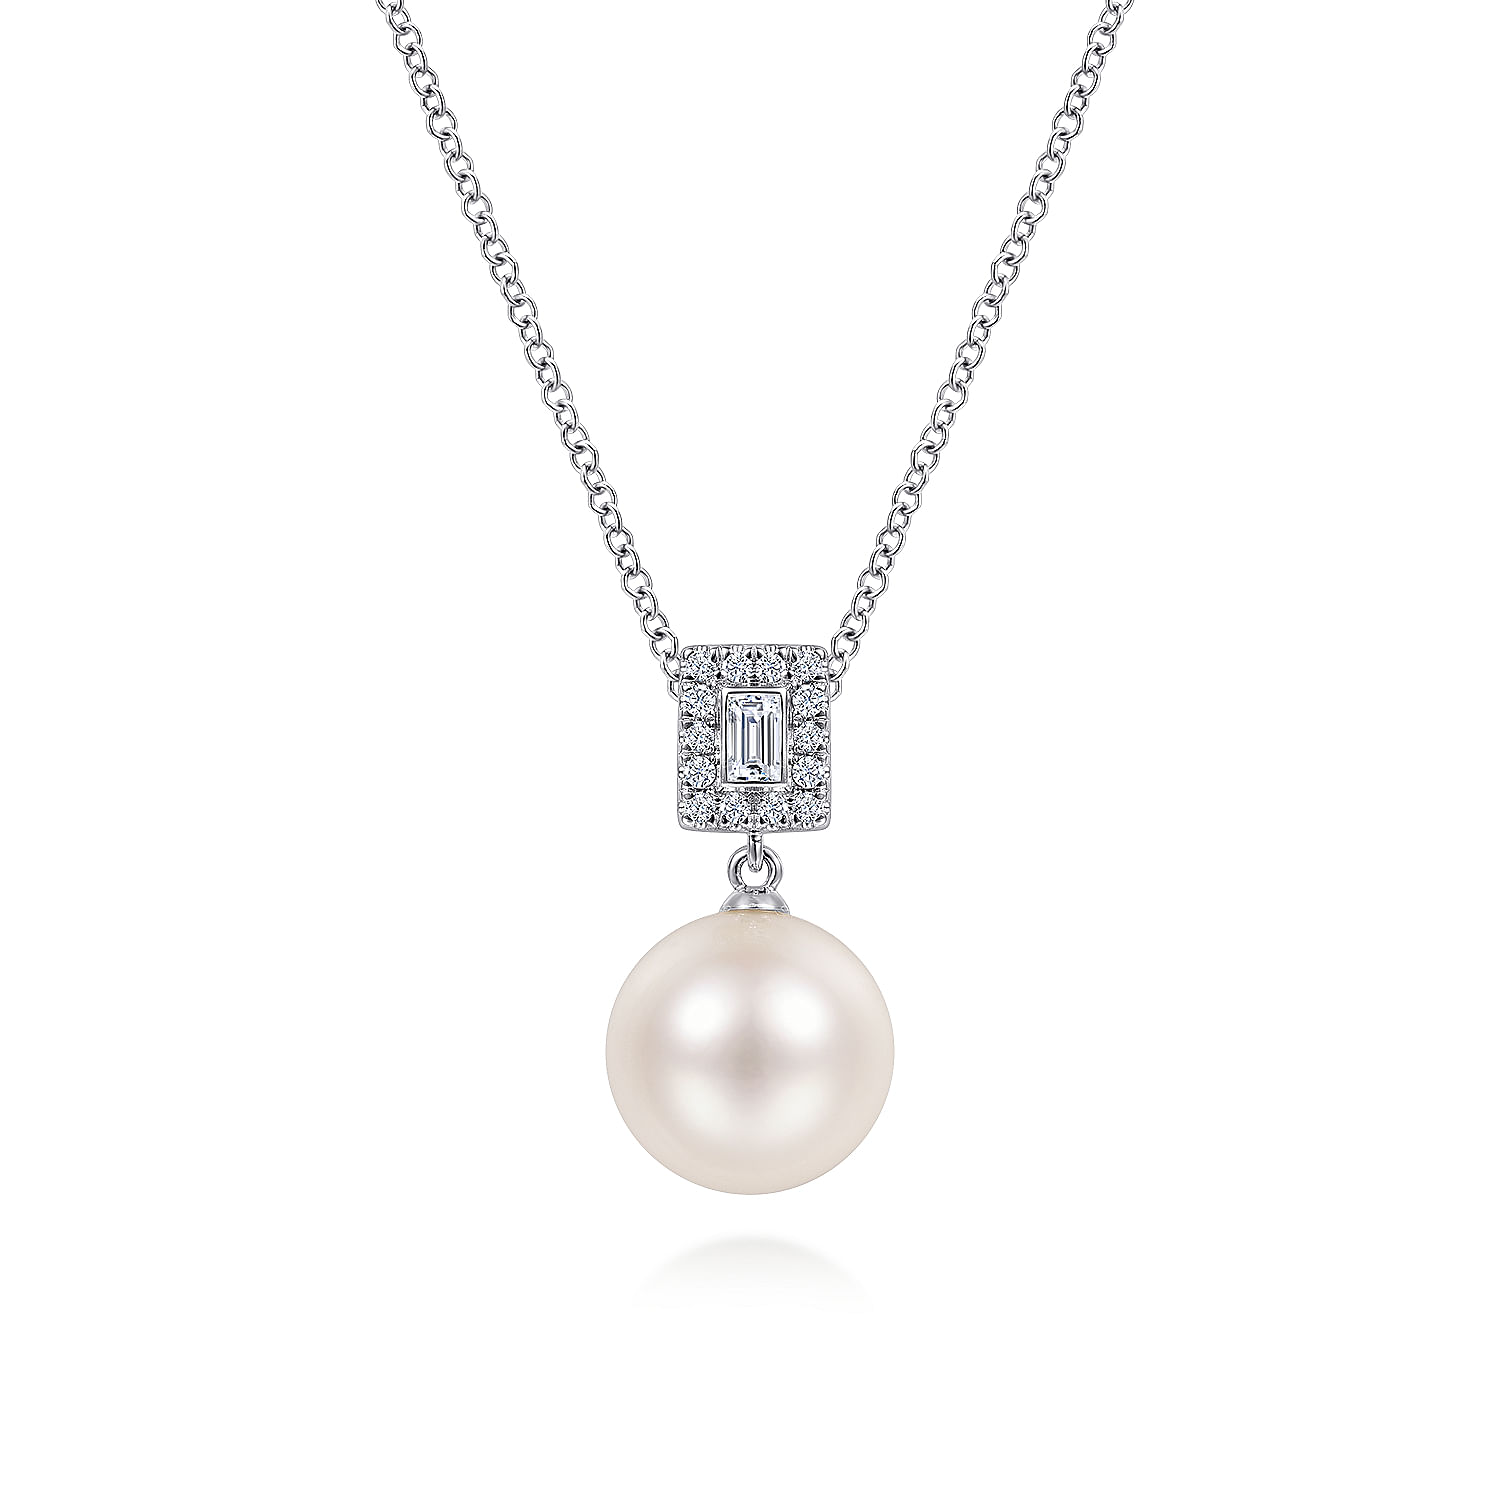 Gabriel - 14K White Gold Pavé Diamond and Pearl Pendant Necklace